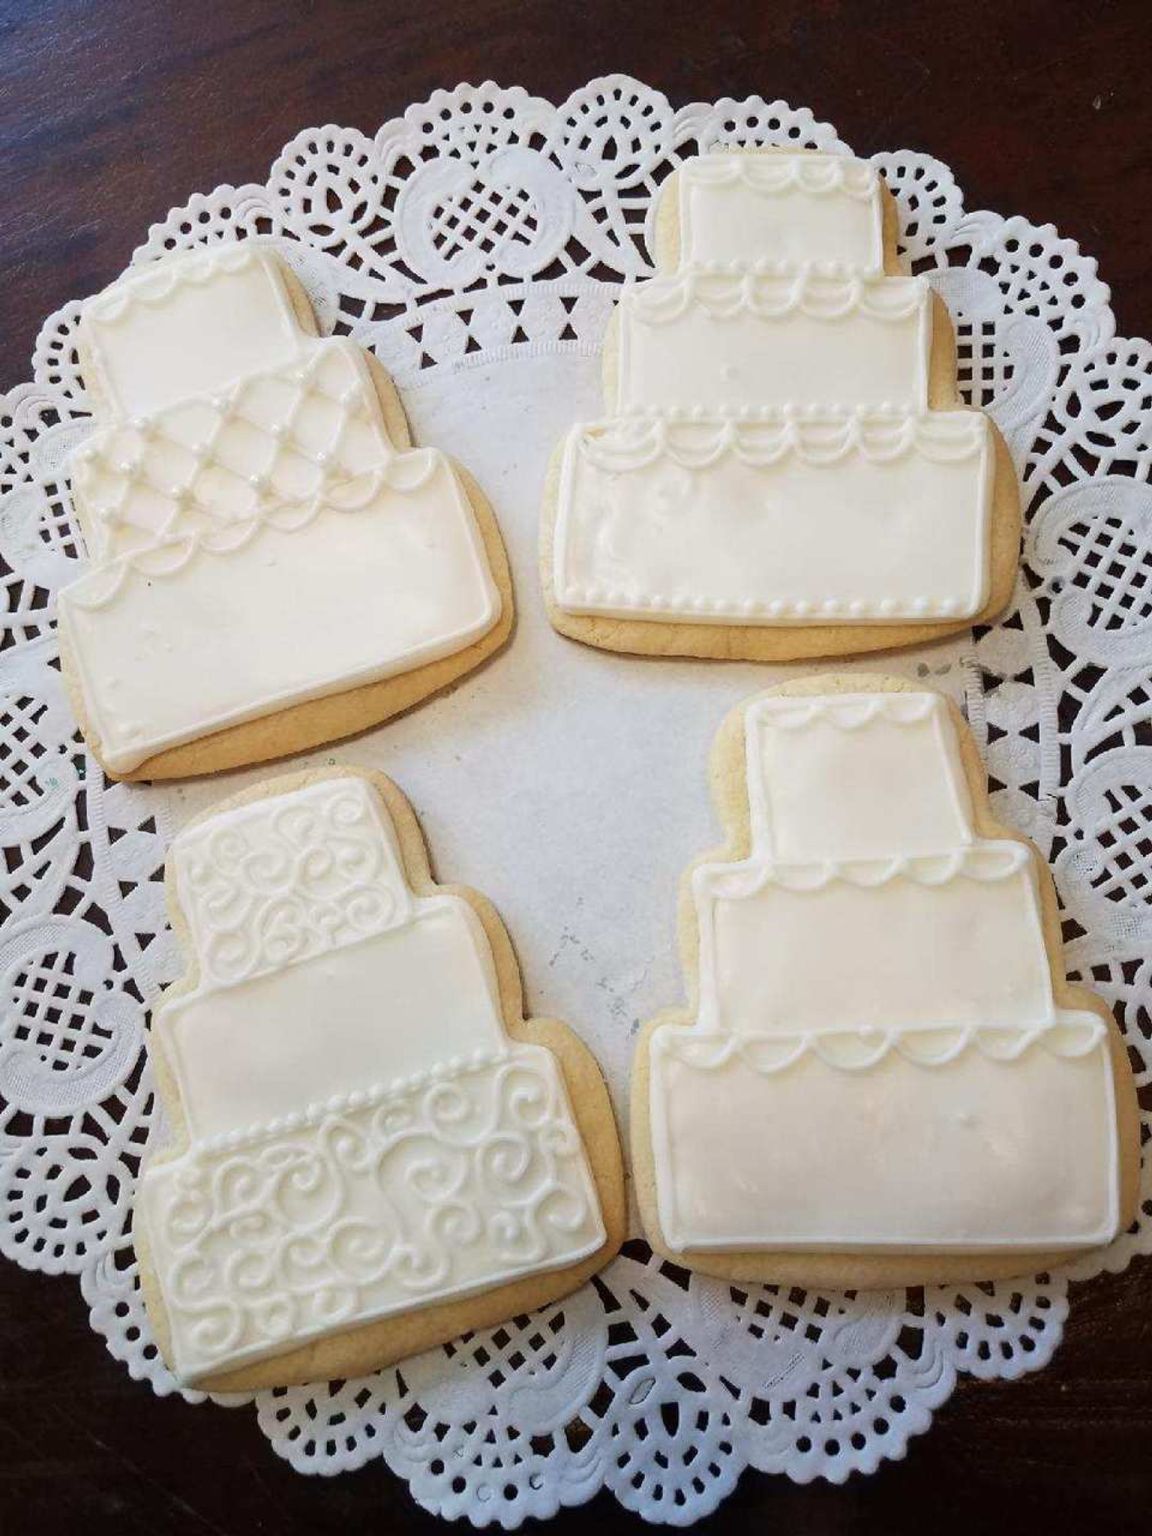 Wedding Cake Sugar Cookies - Maggie & Molly